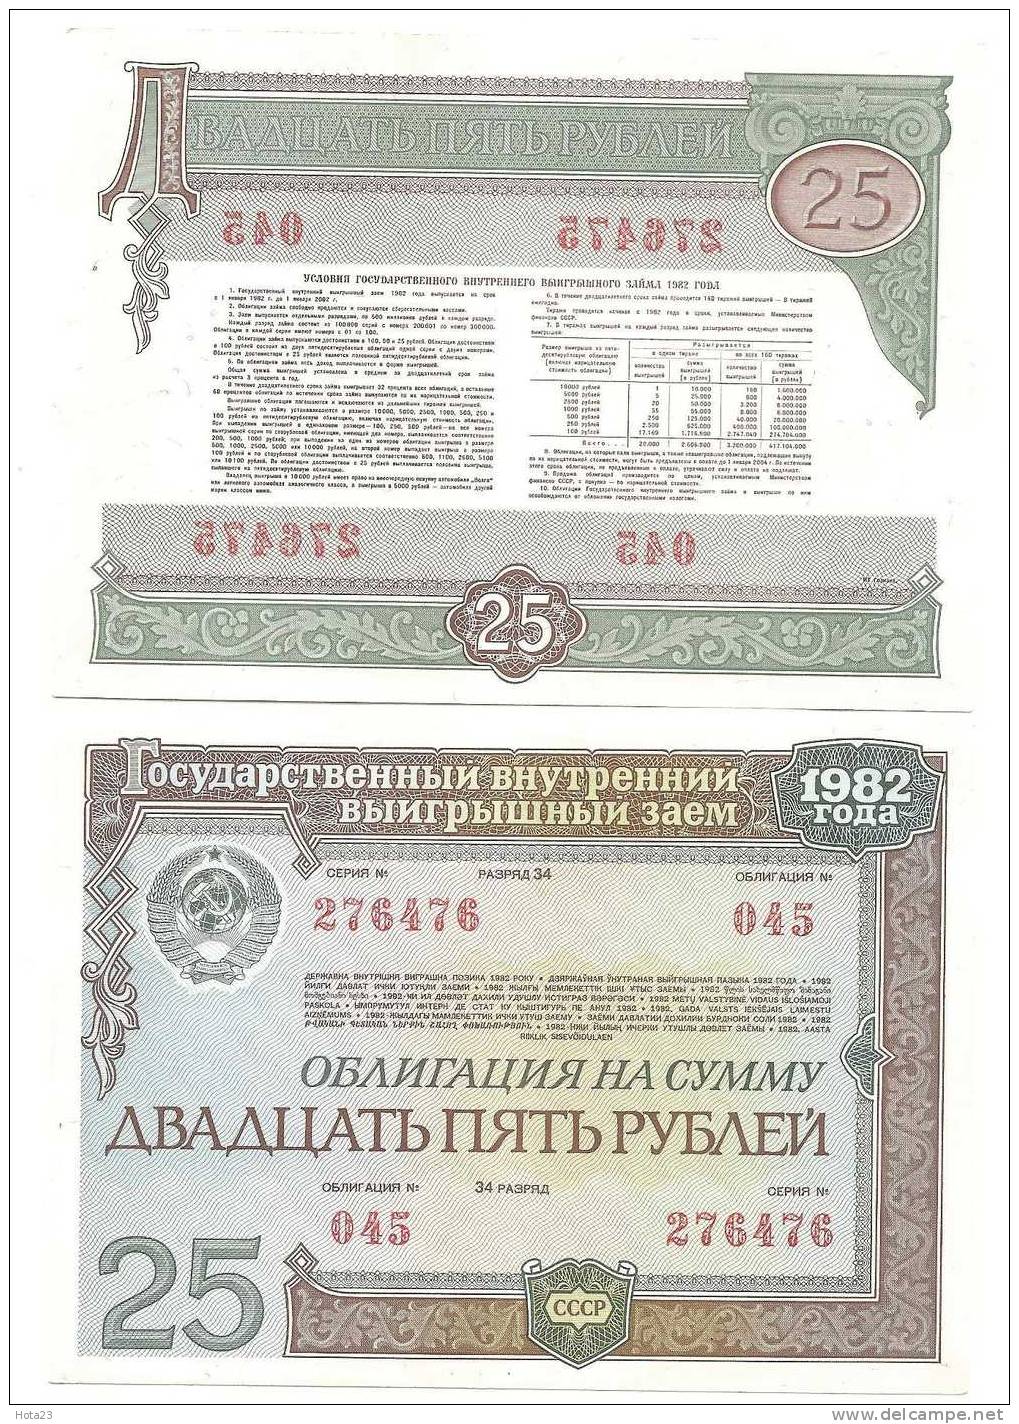 Russia State Loan Bond 25 Roubles Obligation 1982 UNC - Russia